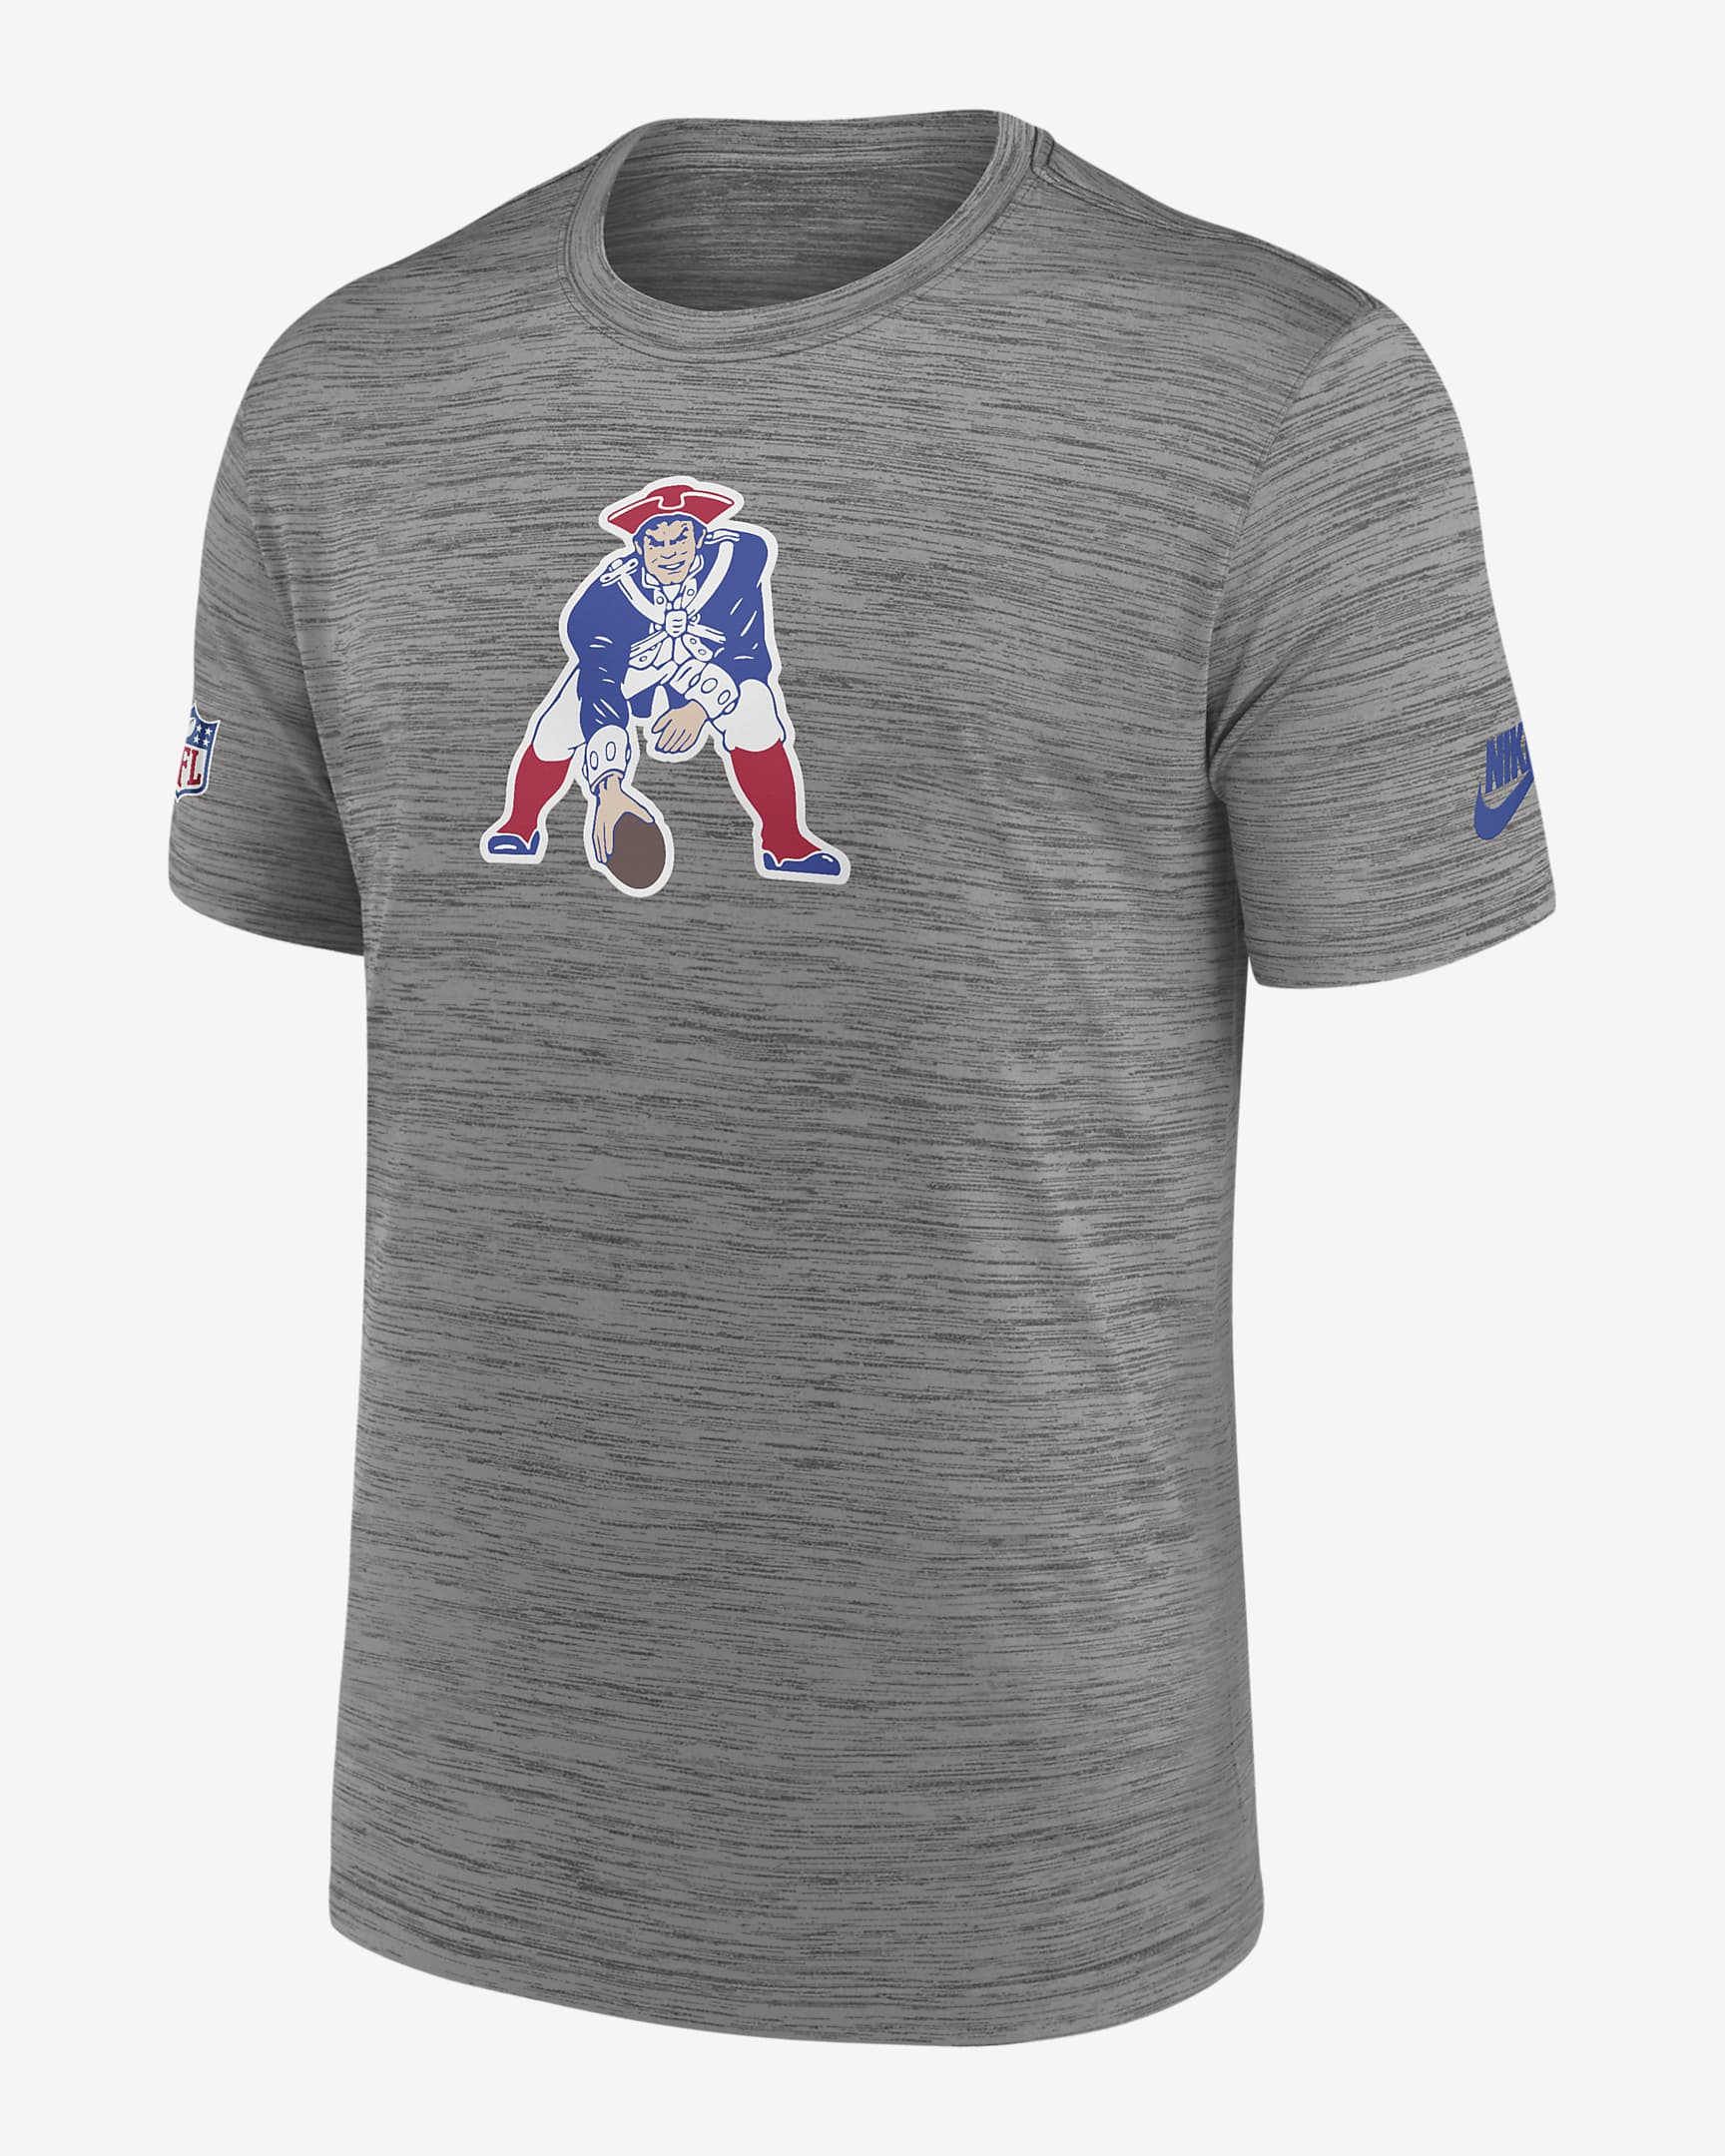 Nike Dri-FIT Team (NFL New England Patriots) Men's T-Shirt. Nike.com